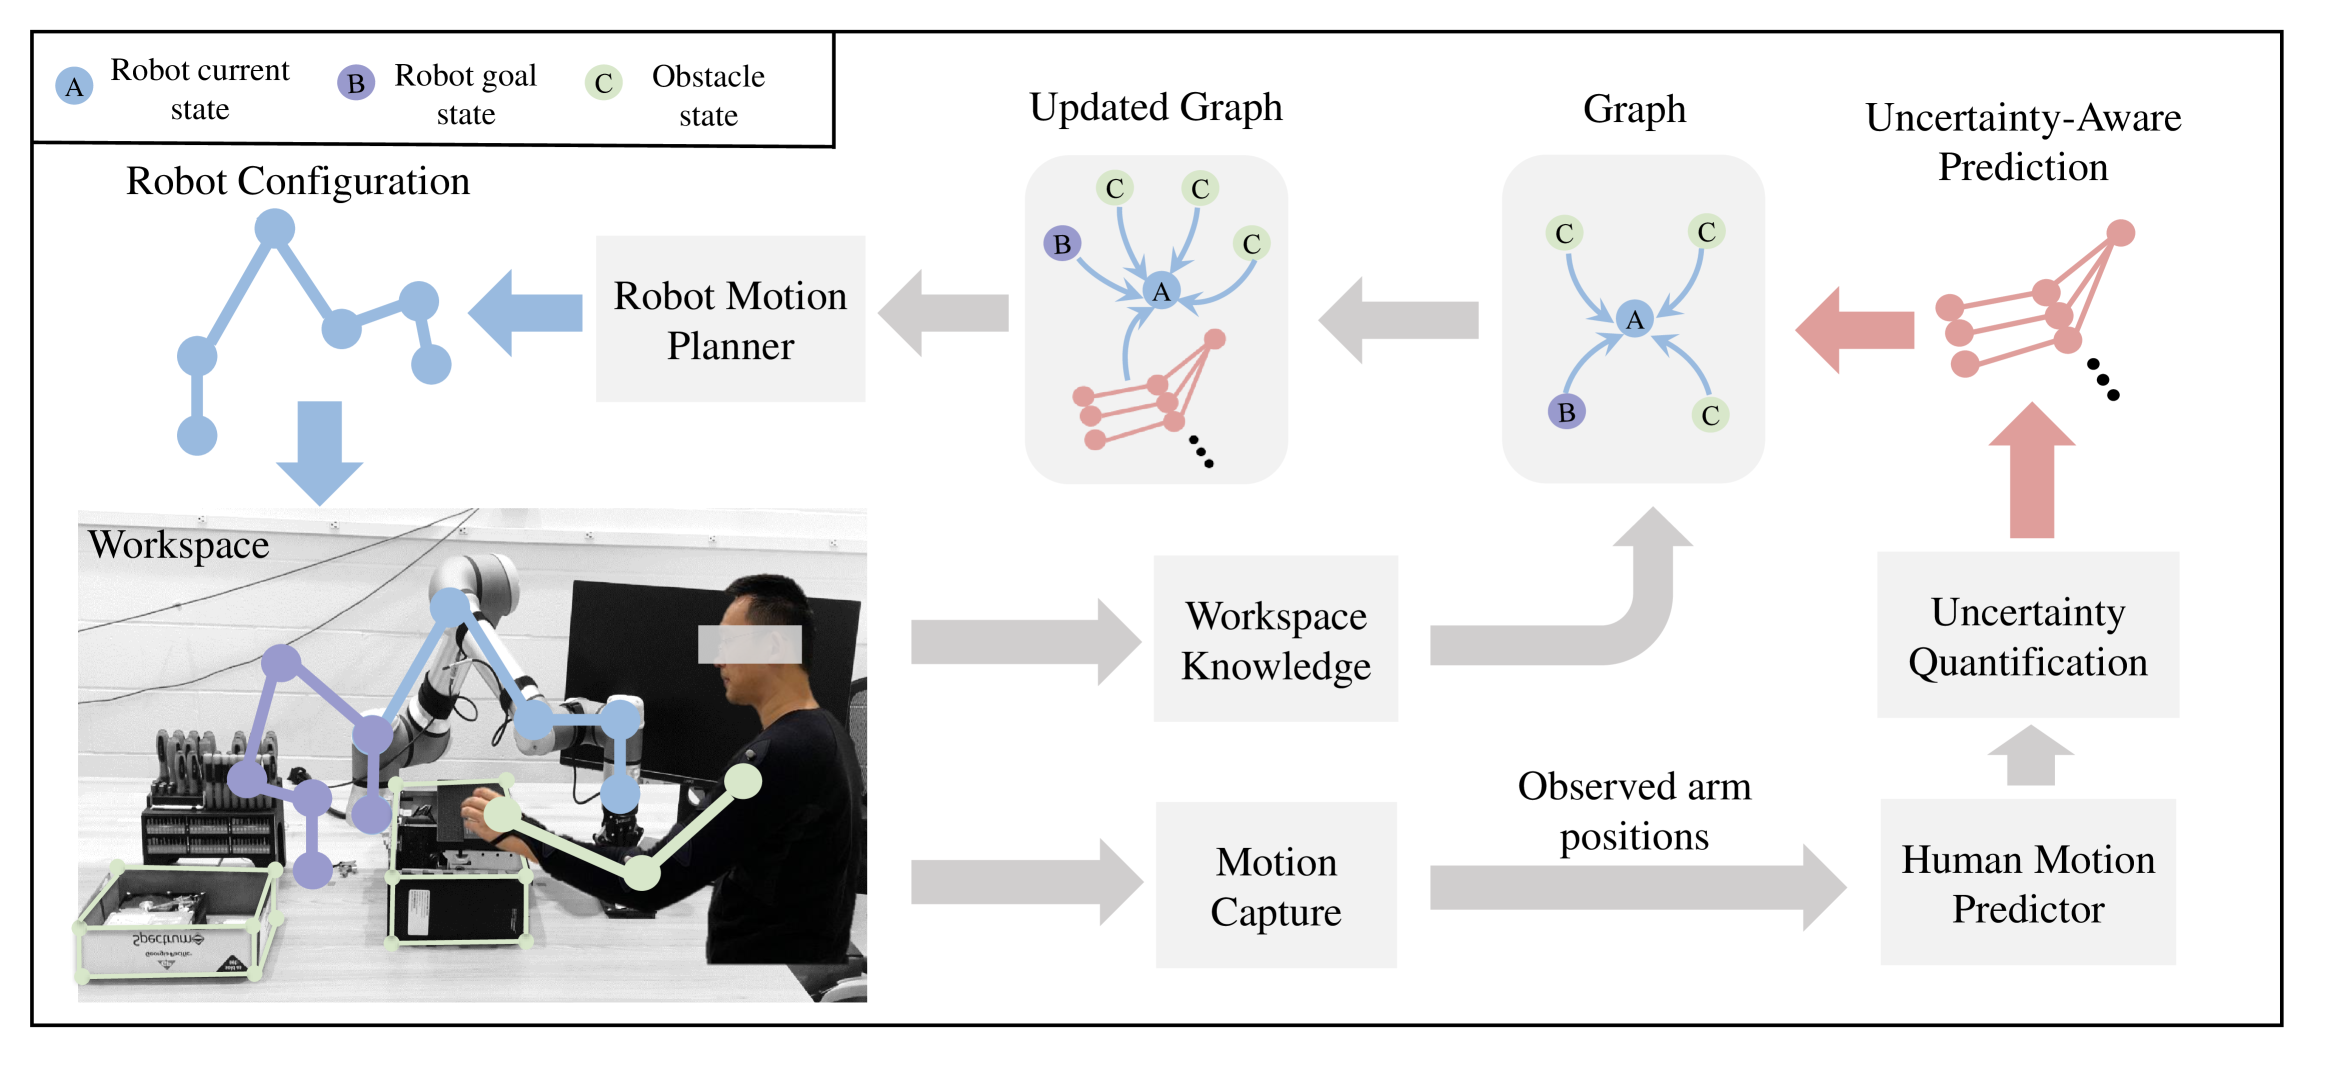 Integrating Uncertainty-Aware Human Motion Prediction into Graph-Based Manipulator Motion Planning